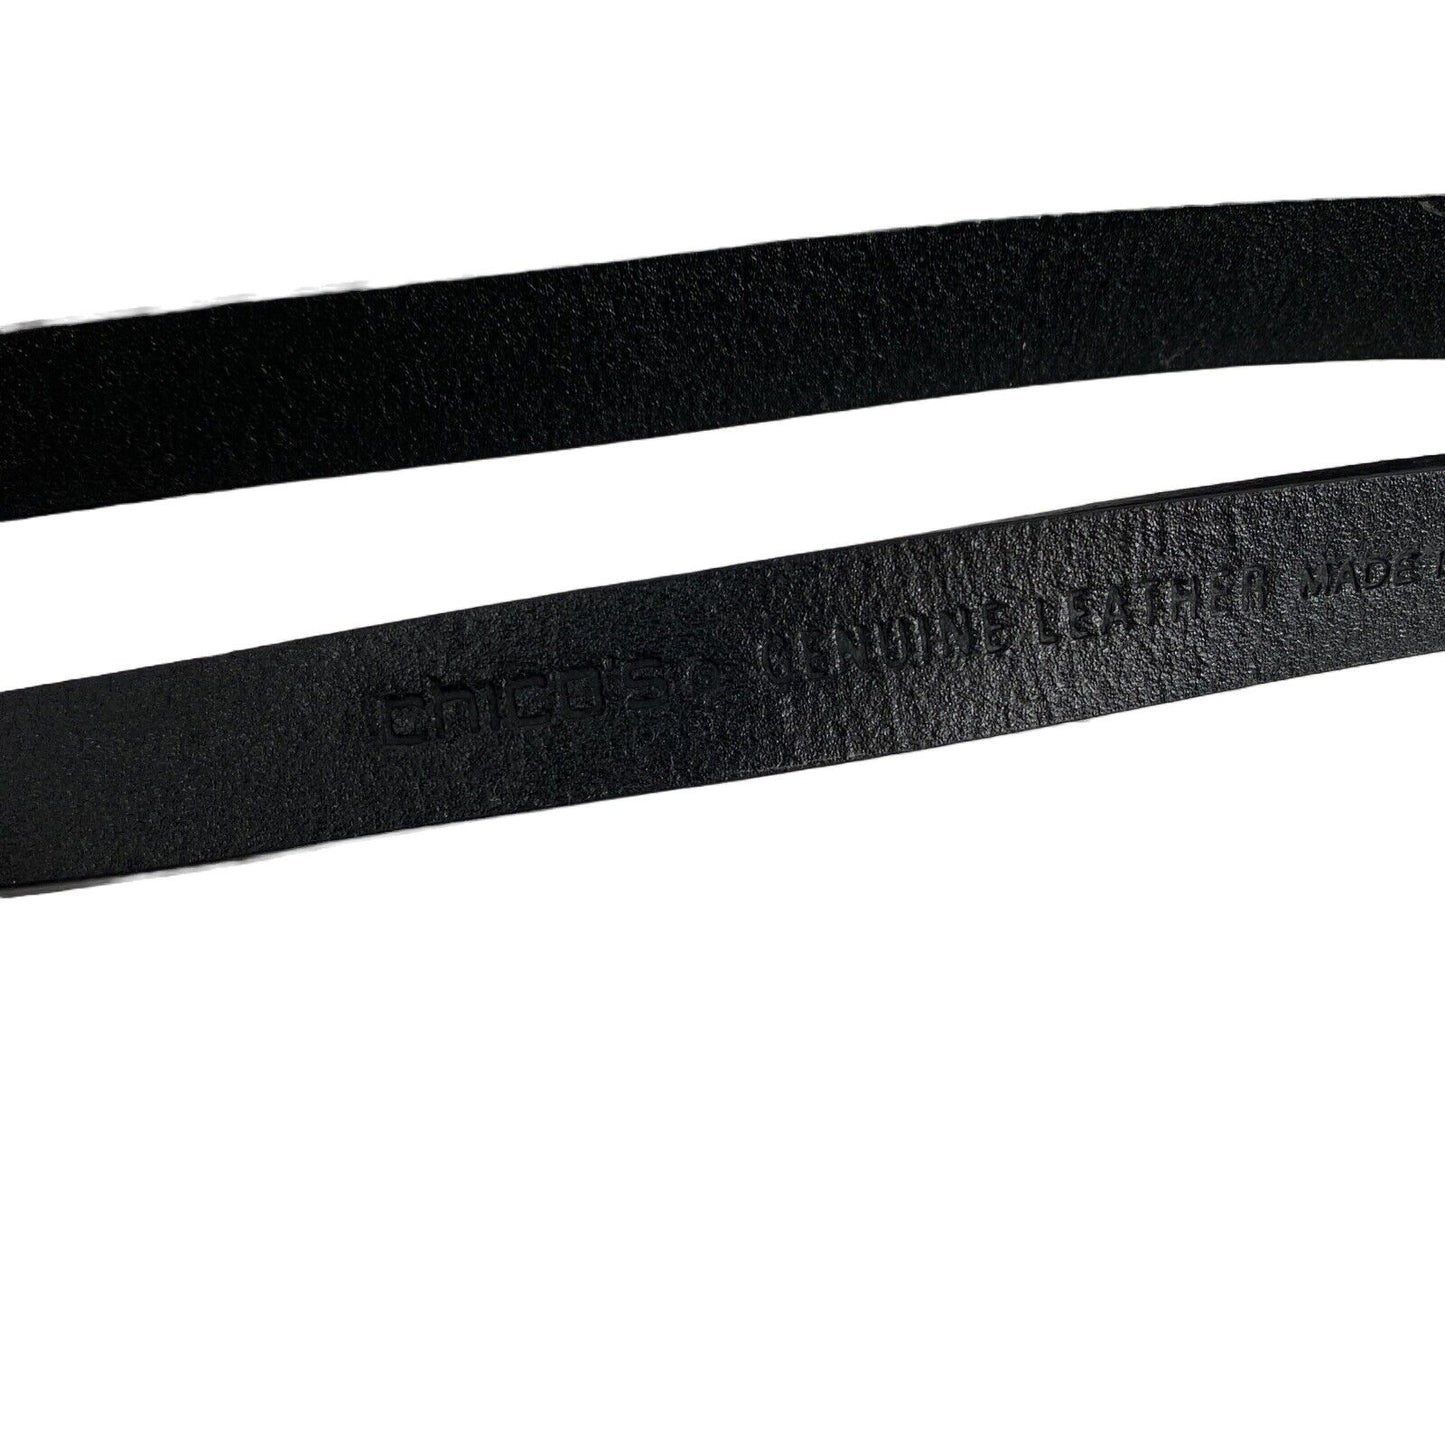 NEW Chico's Women's Black Genuine Leather Derby Double Belt - M